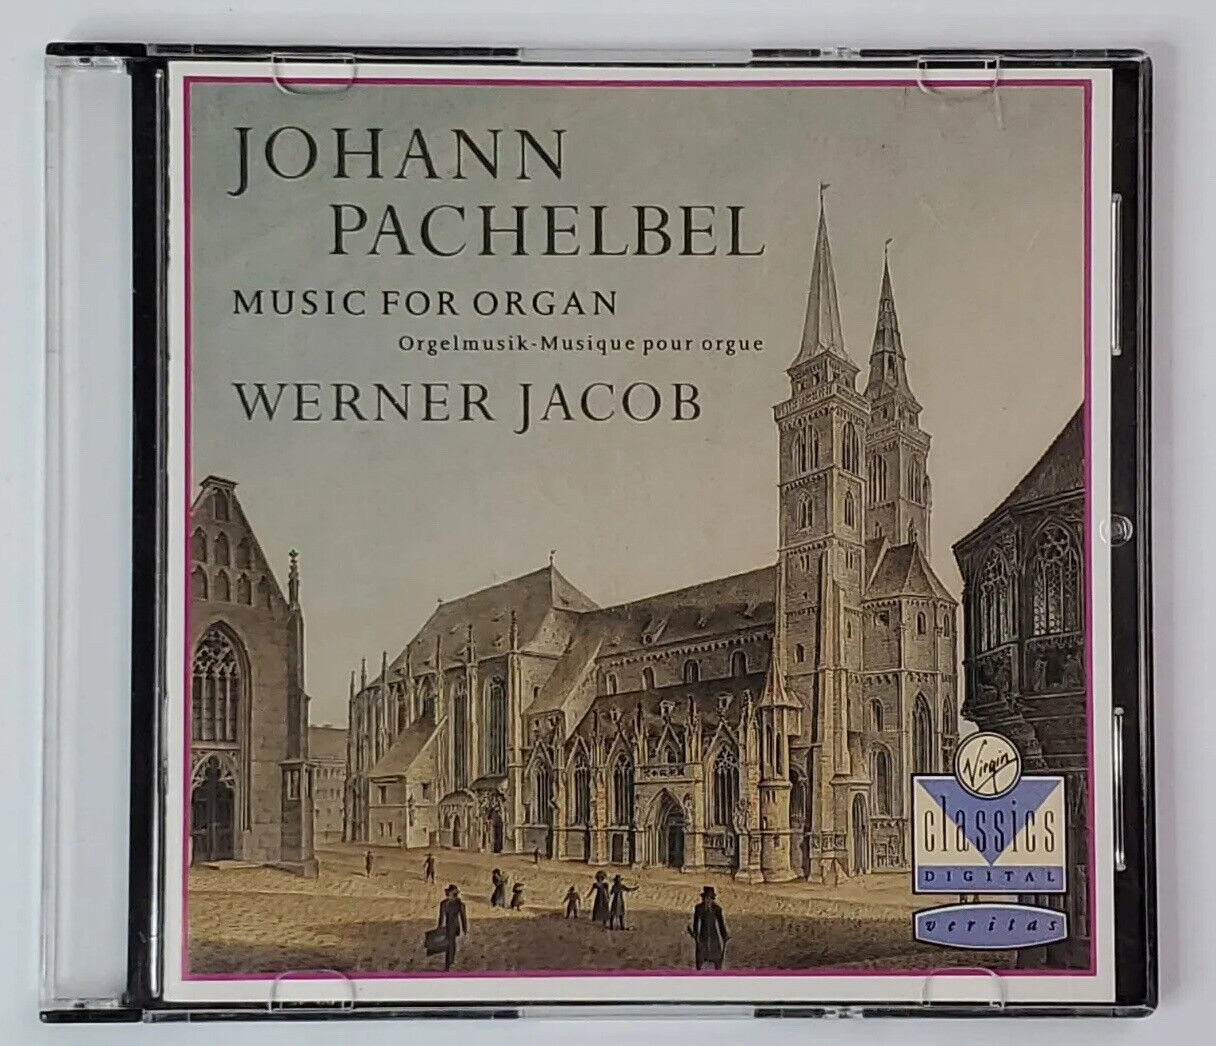 Johann Pachelbel CD Audio Music For Organ Werner Jacob 1990 Album